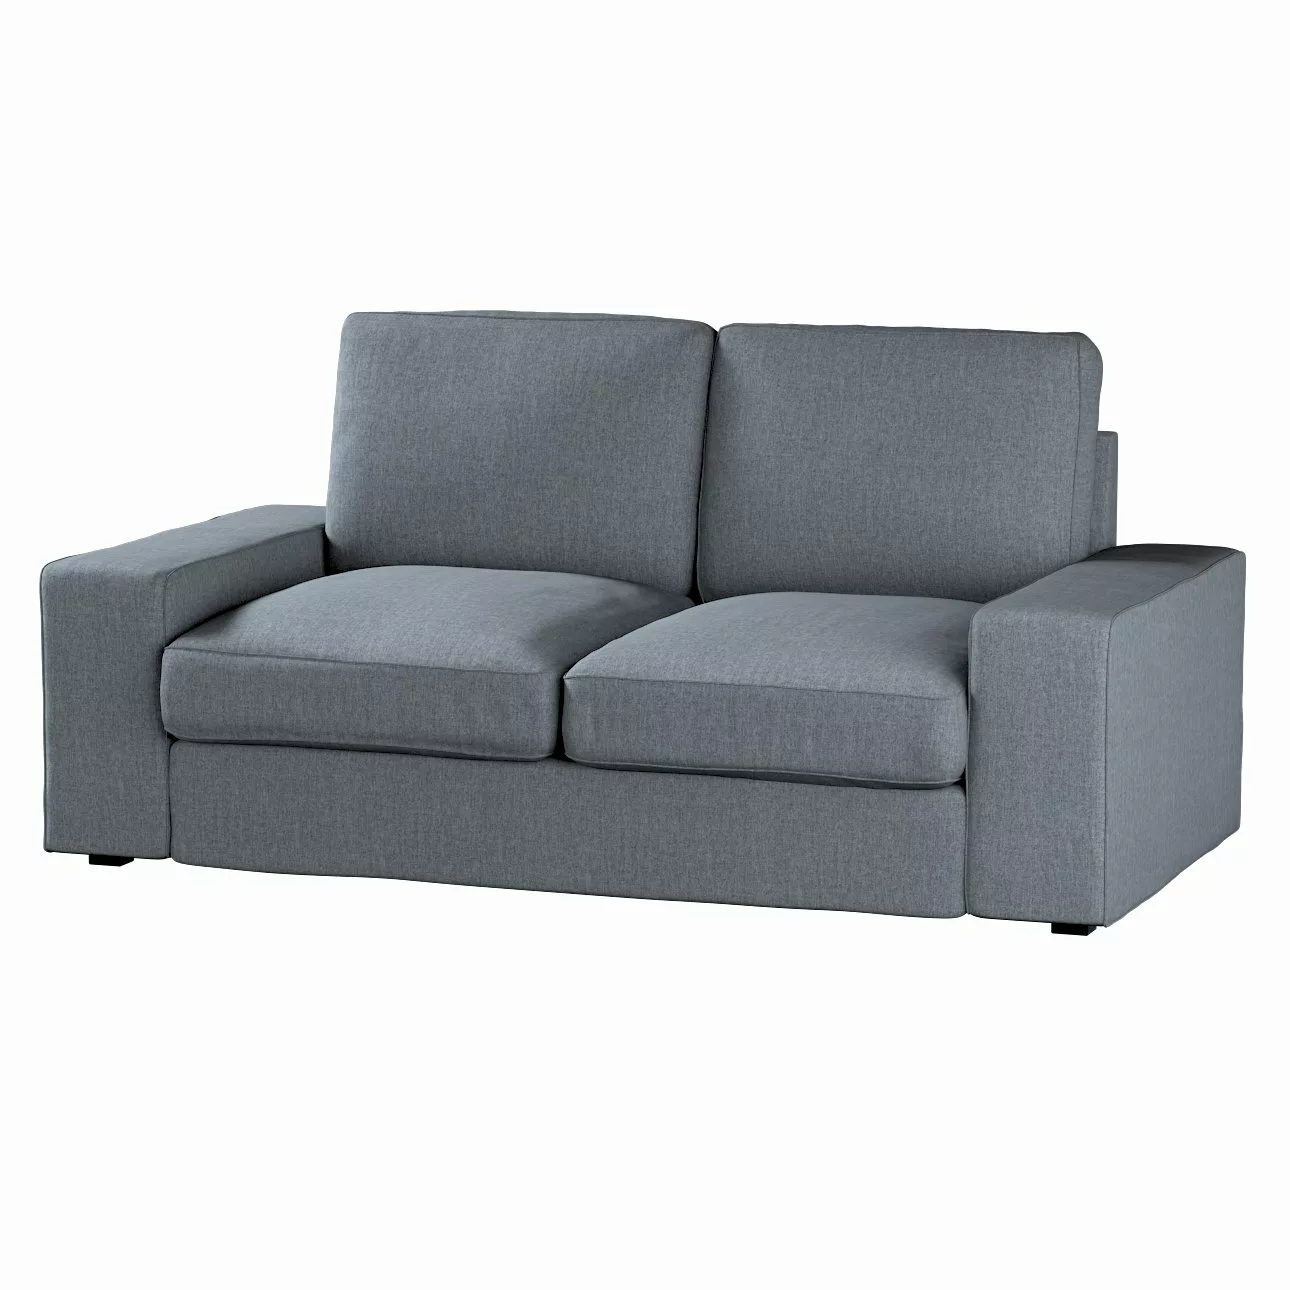 Bezug für Kivik 2-Sitzer Sofa, grau, Bezug für Sofa Kivik 2-Sitzer, City (7 günstig online kaufen